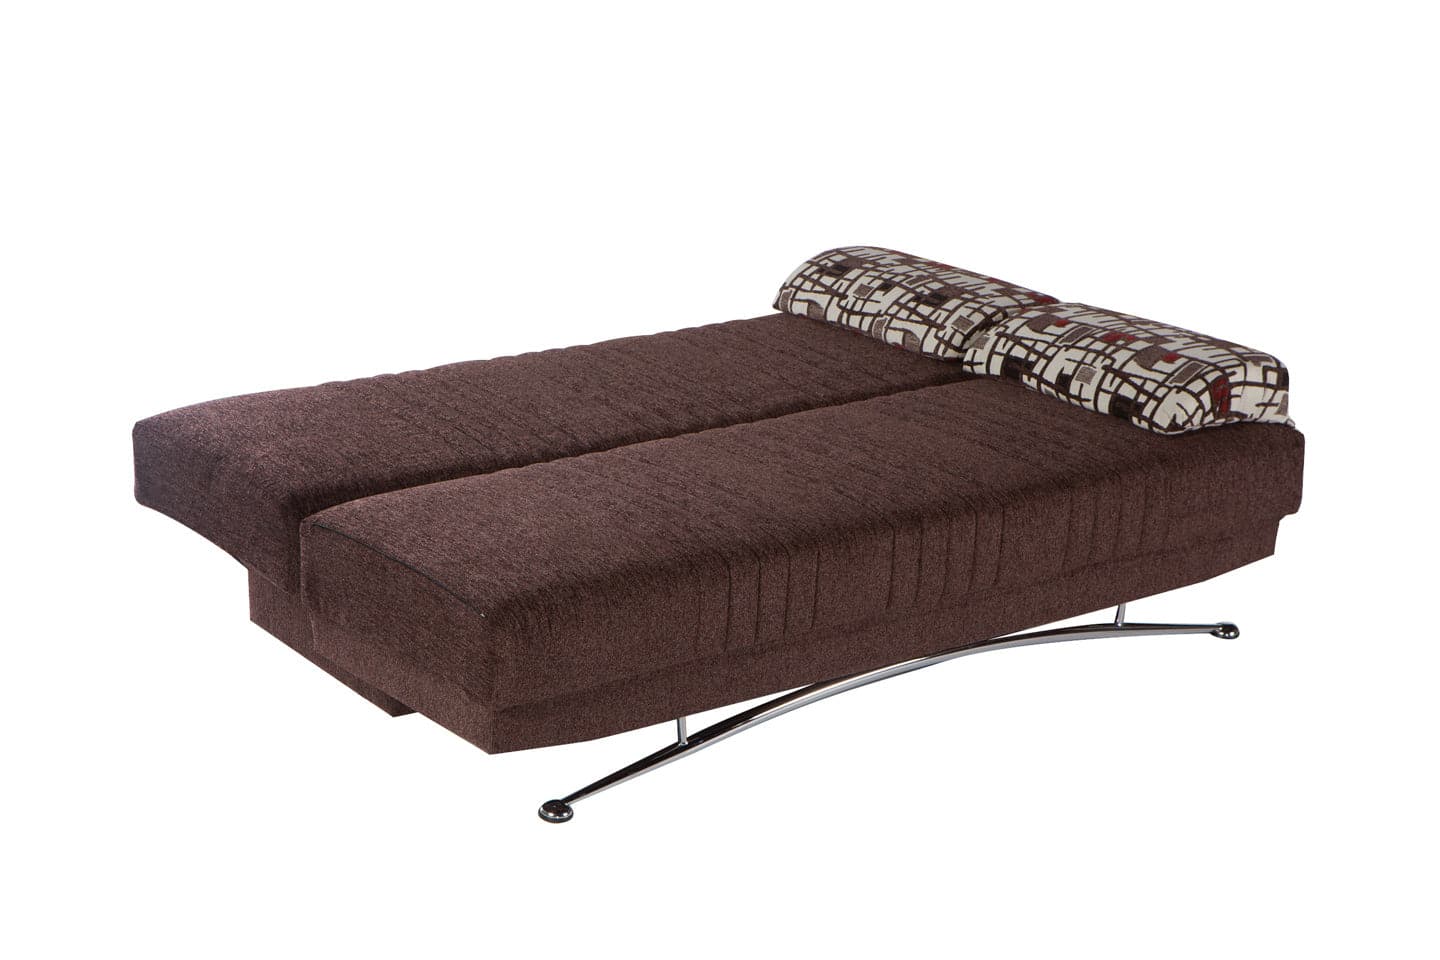 Fantasy 3 Seat Sleeper Sofa by Bellona